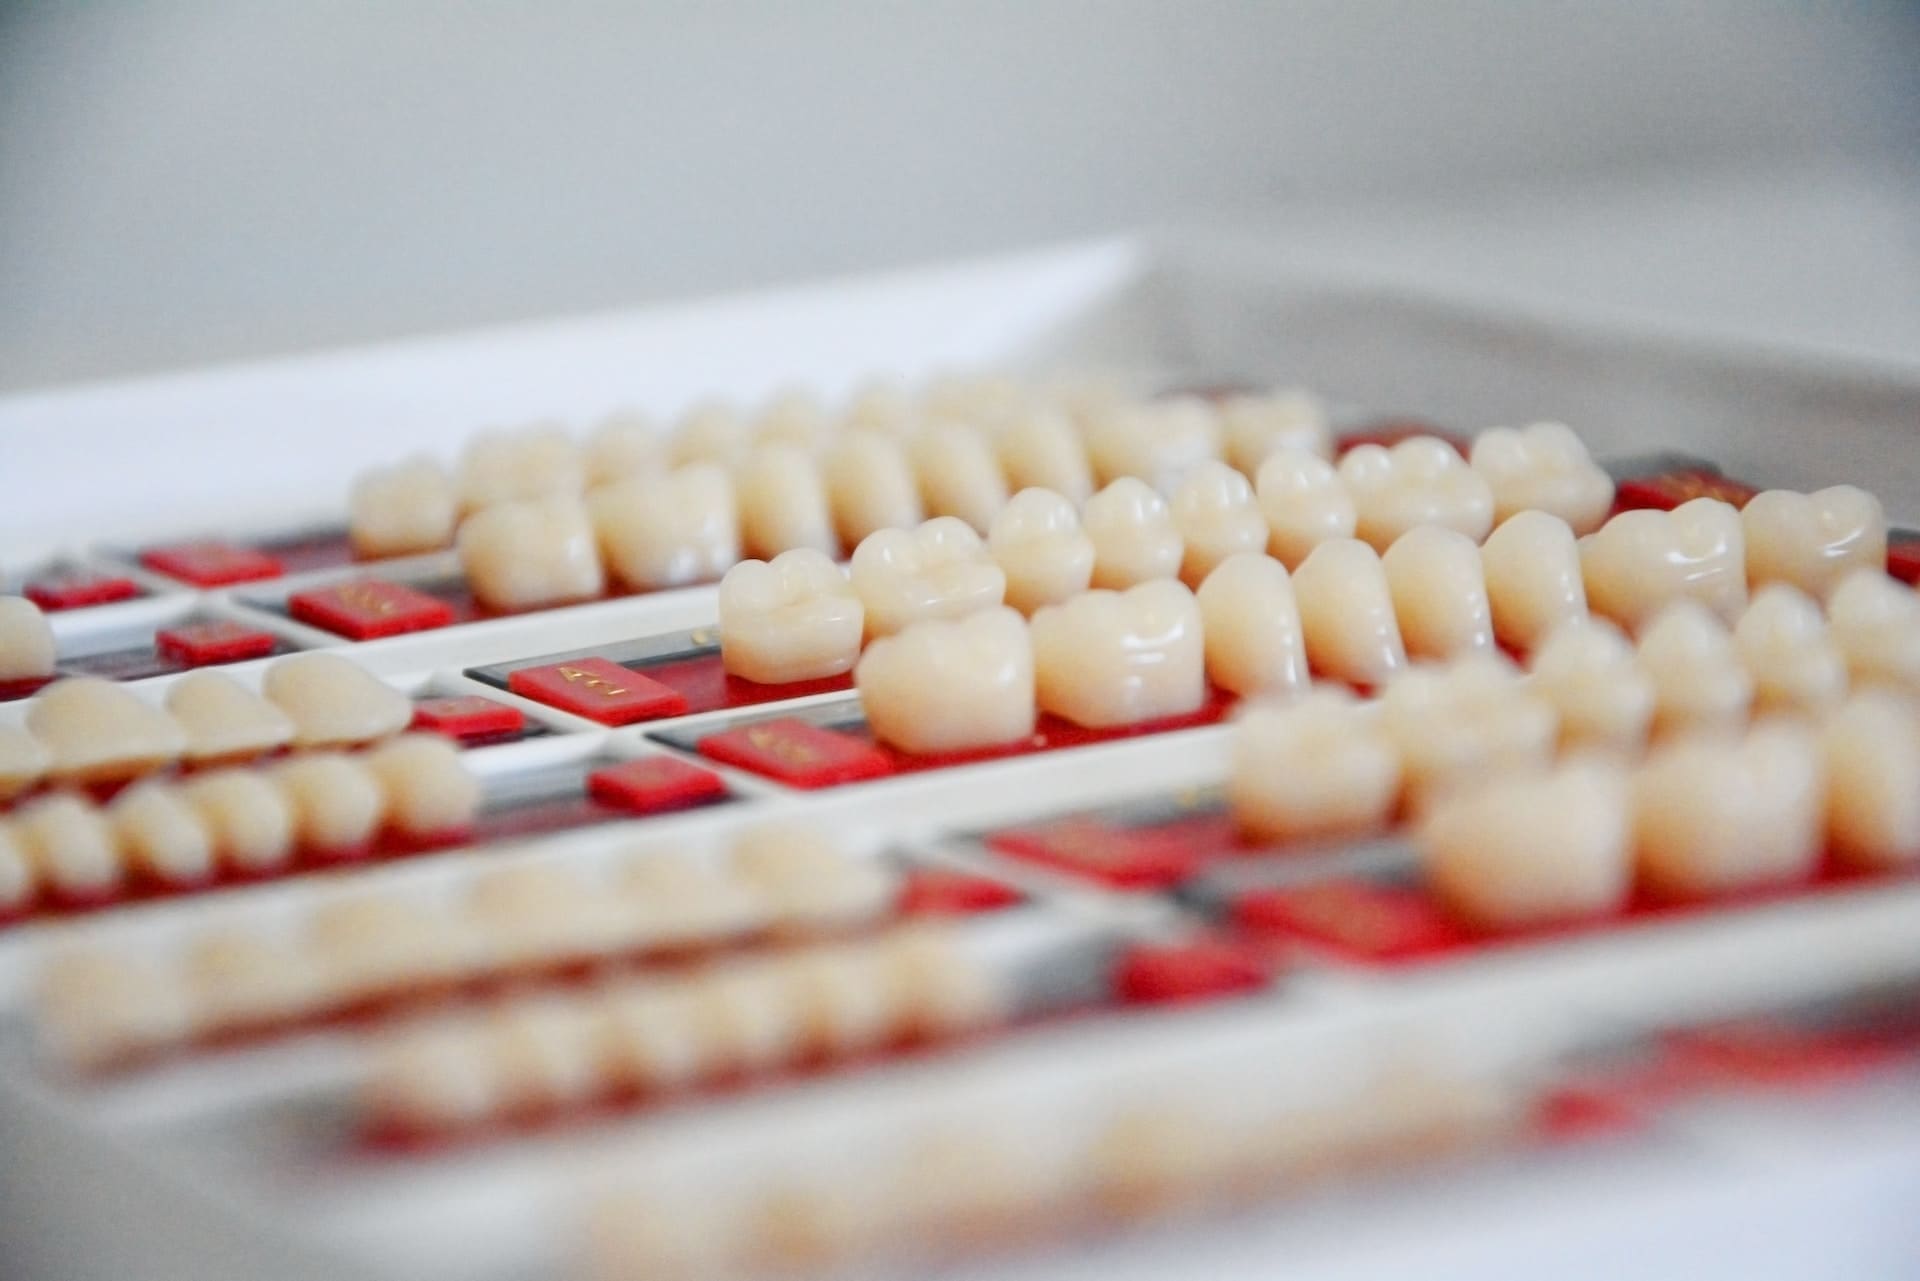 Tray of teeth models arranged in rows.